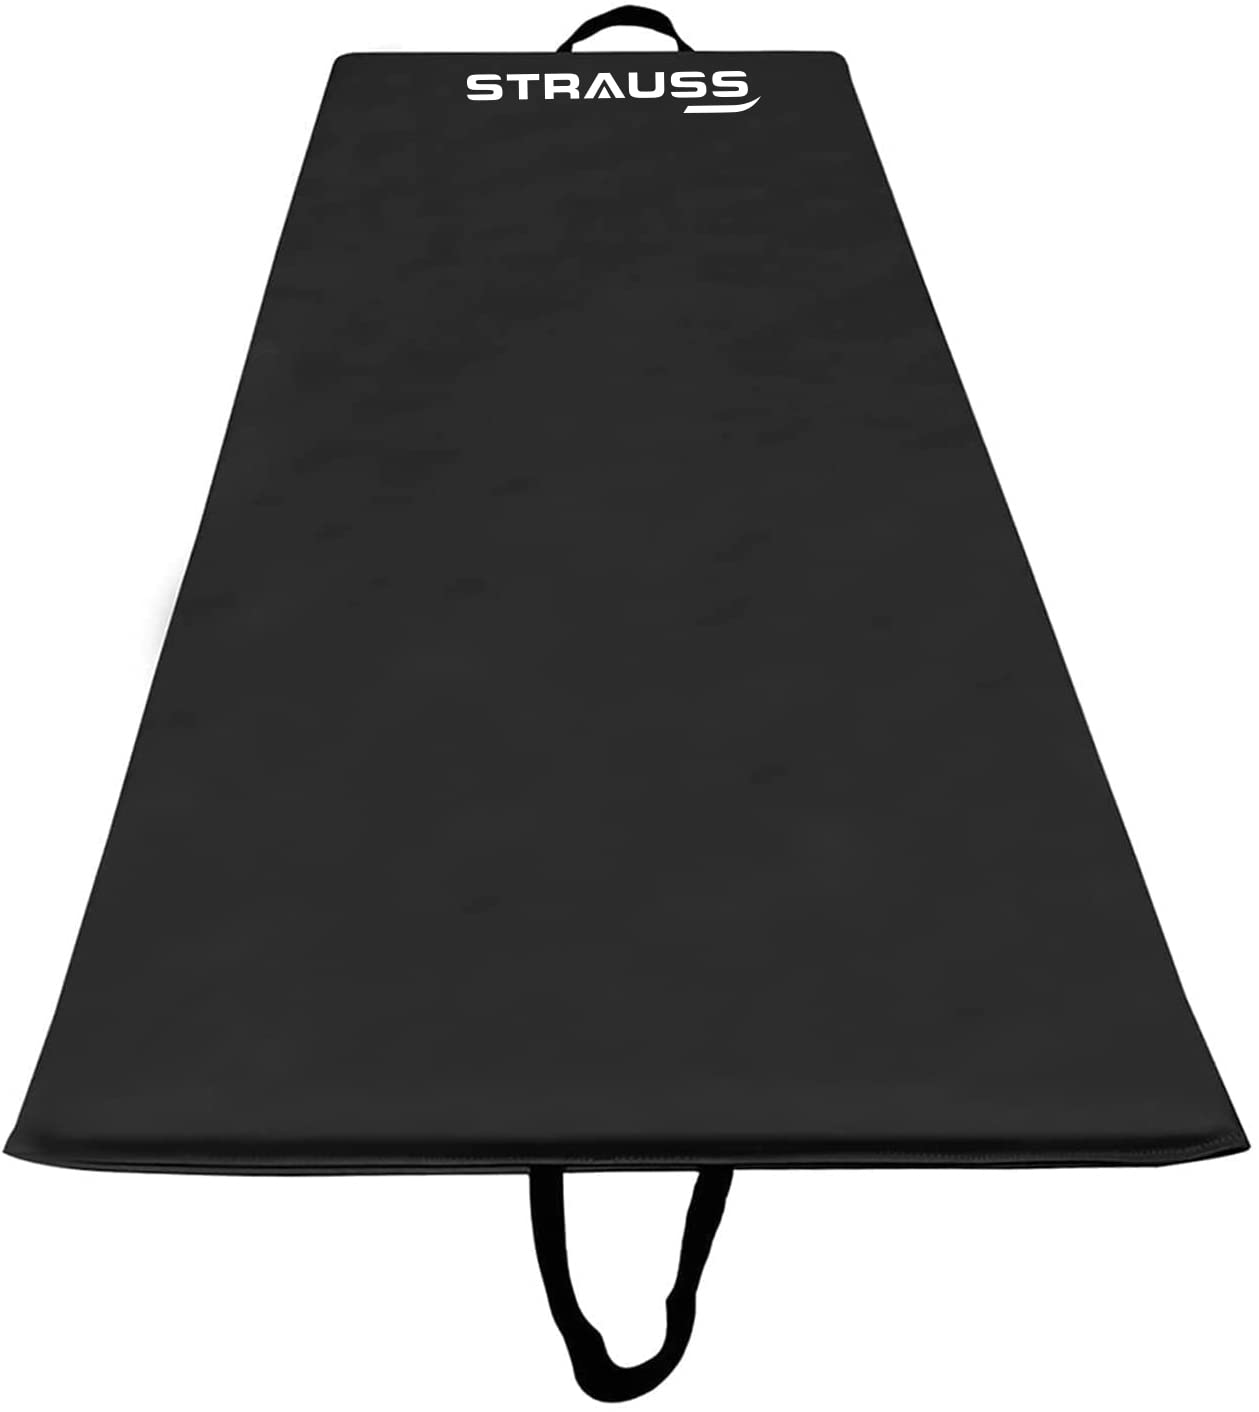 Strauss Yoga Mat Rolling, 10 mm (Black)